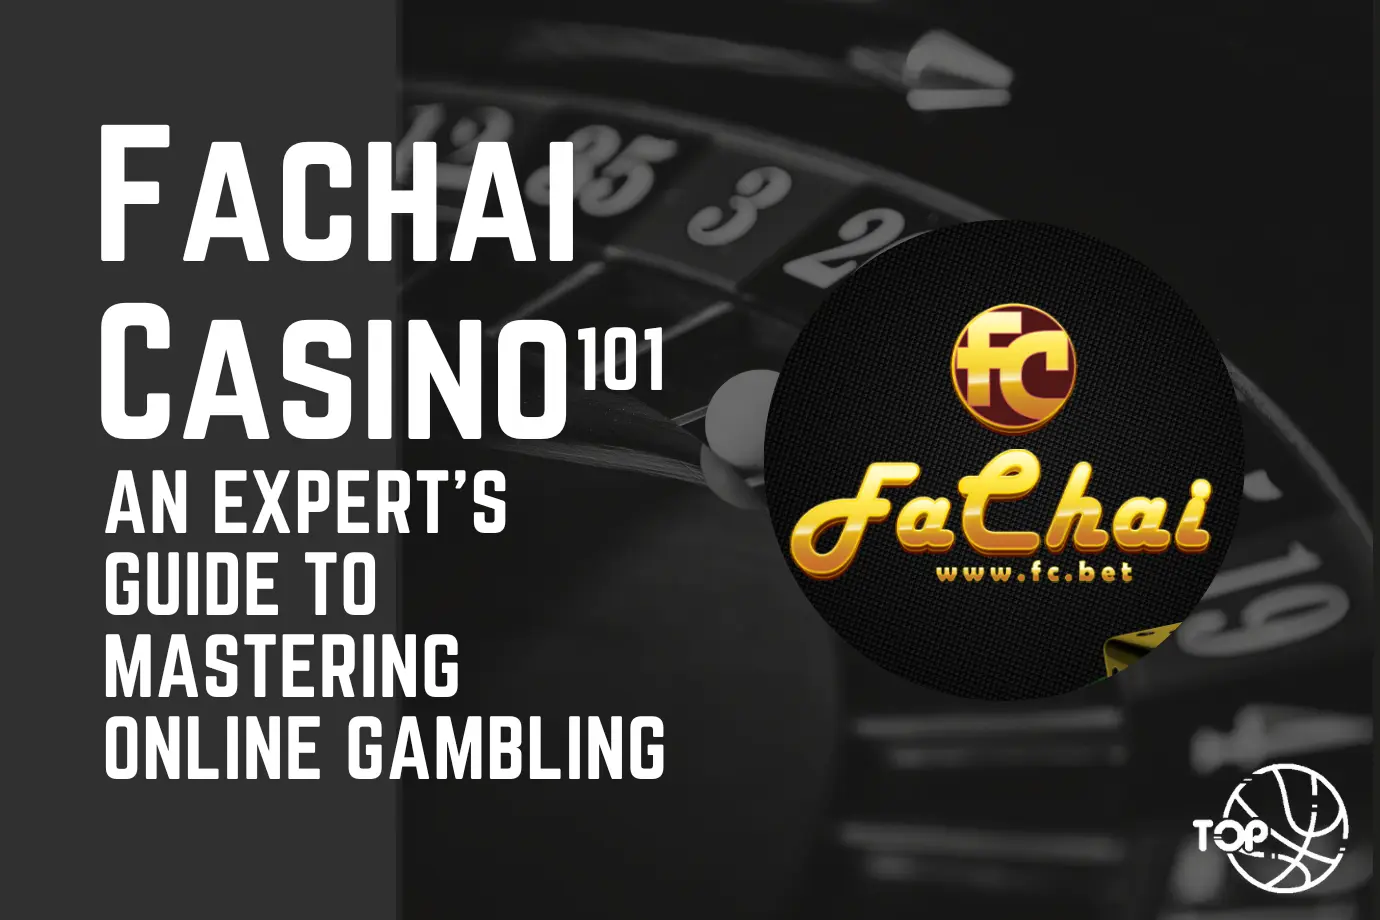 Fachai Casino 101: An Expert's Guide to Mastering Online Gambling